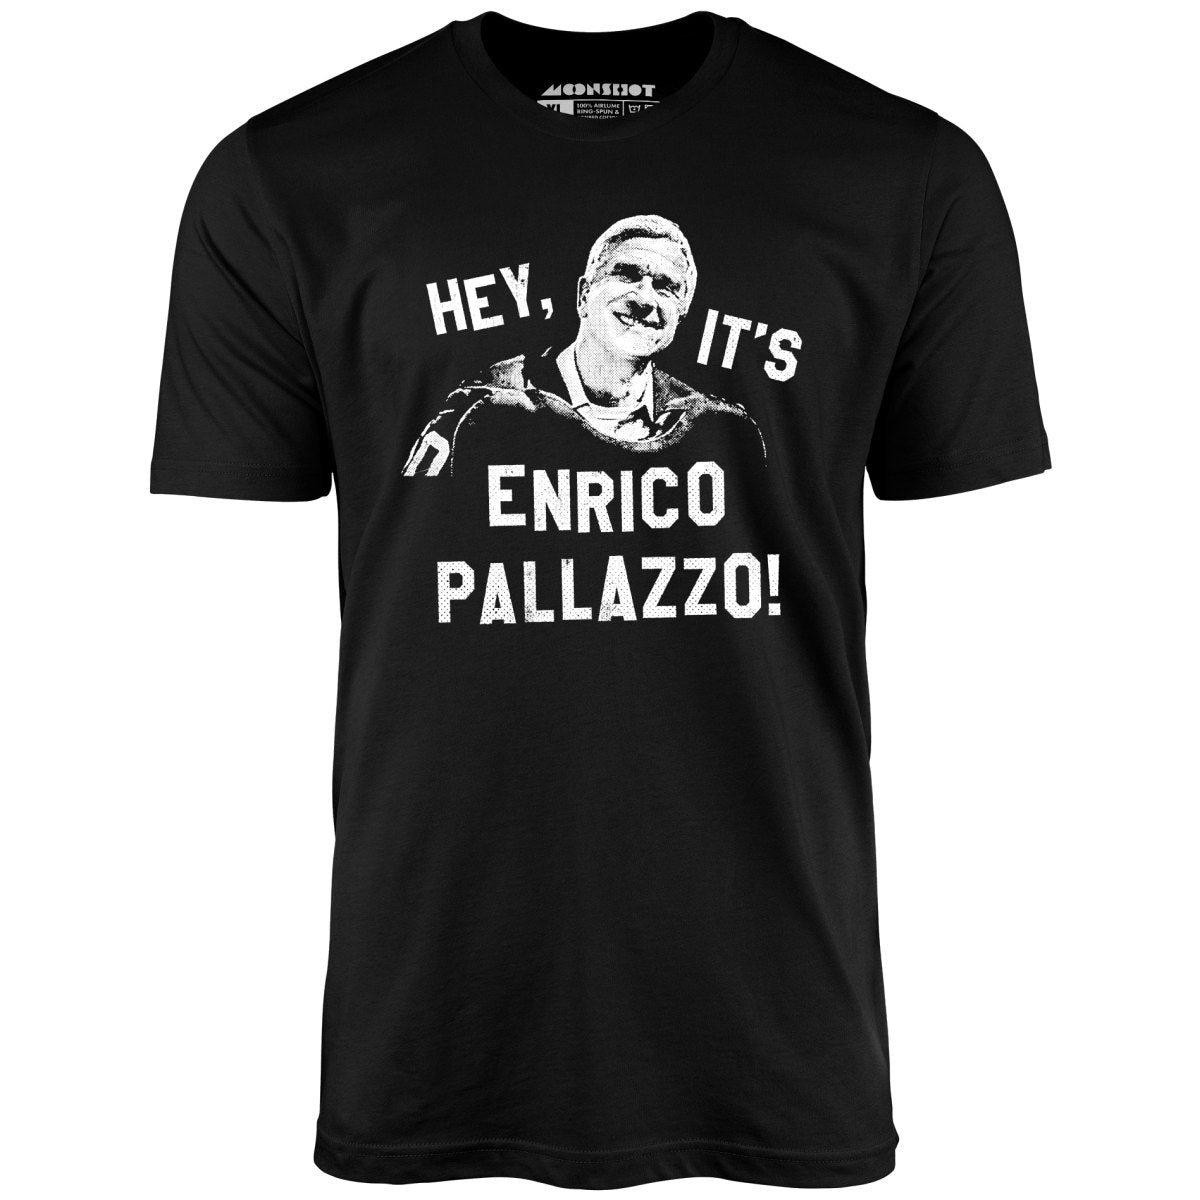 Hey, It's Enrico Pallazzo! - Unisex T-Shirt